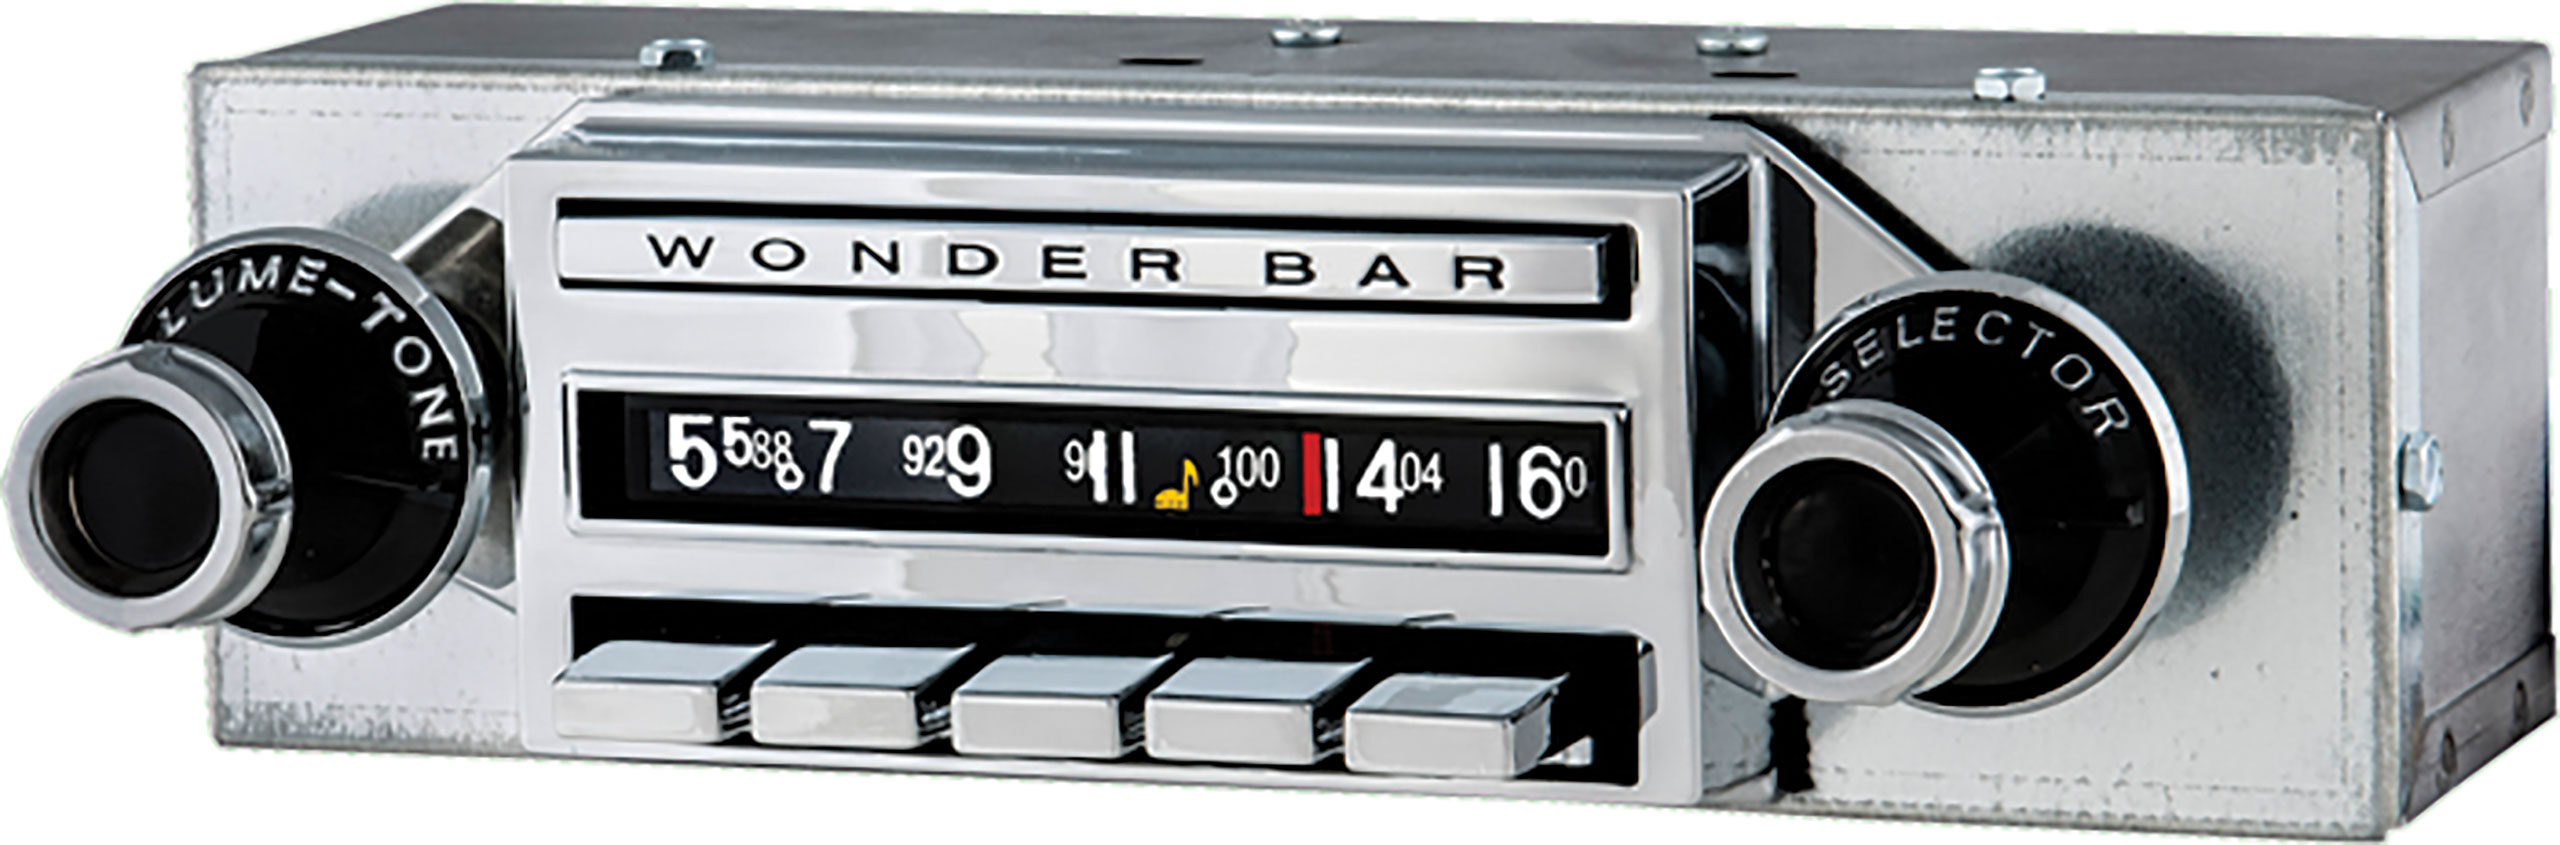 59-60 Corvette C1 AM/FM Wonderbar Stereo Radio W/Bluetooth & Upgraded Power Supply CA-45038 